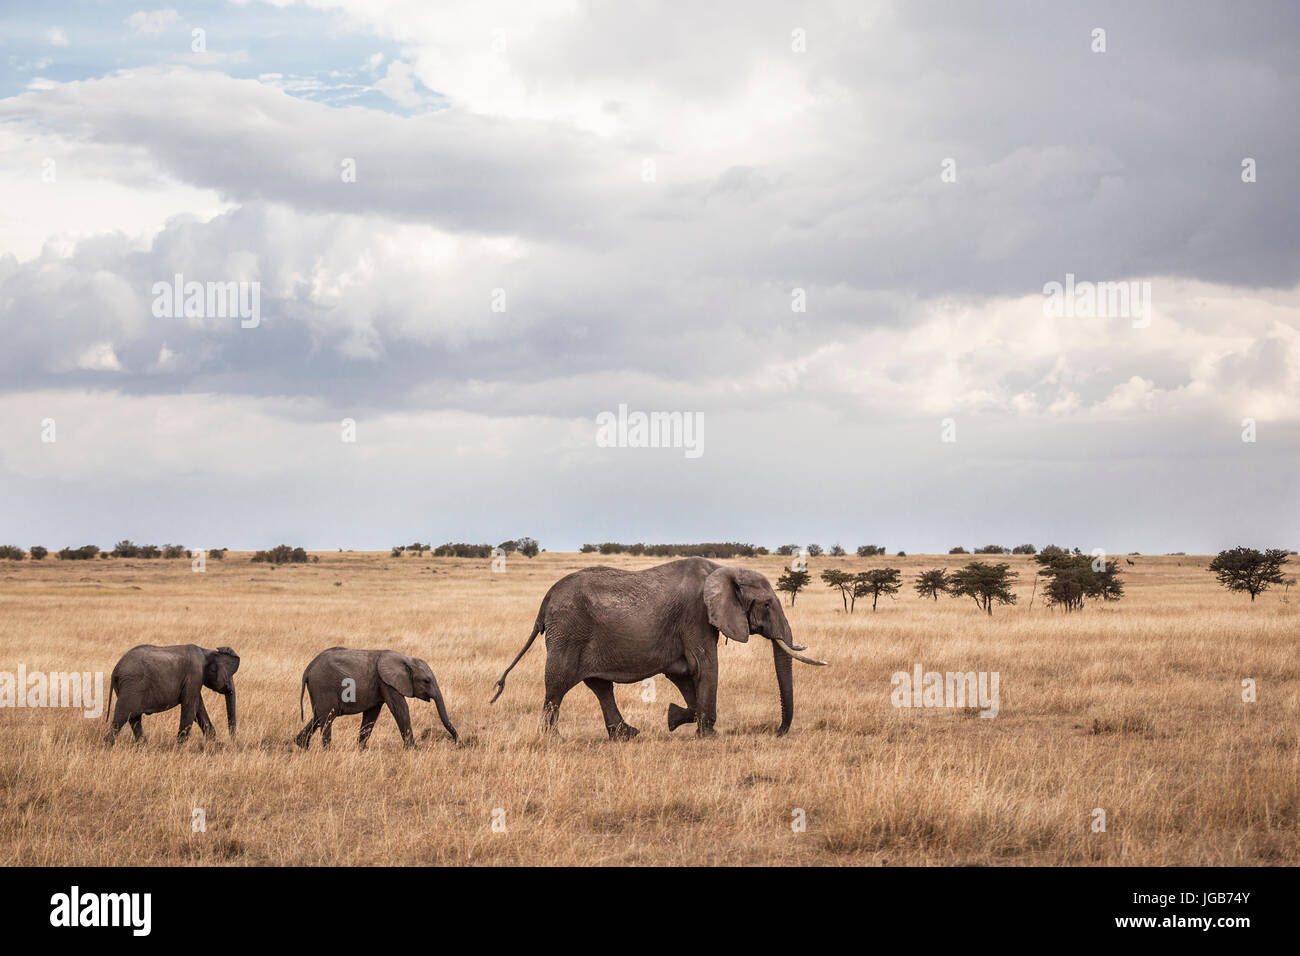 Group of elephants, Masai Mara, Kenya. Stock Photo